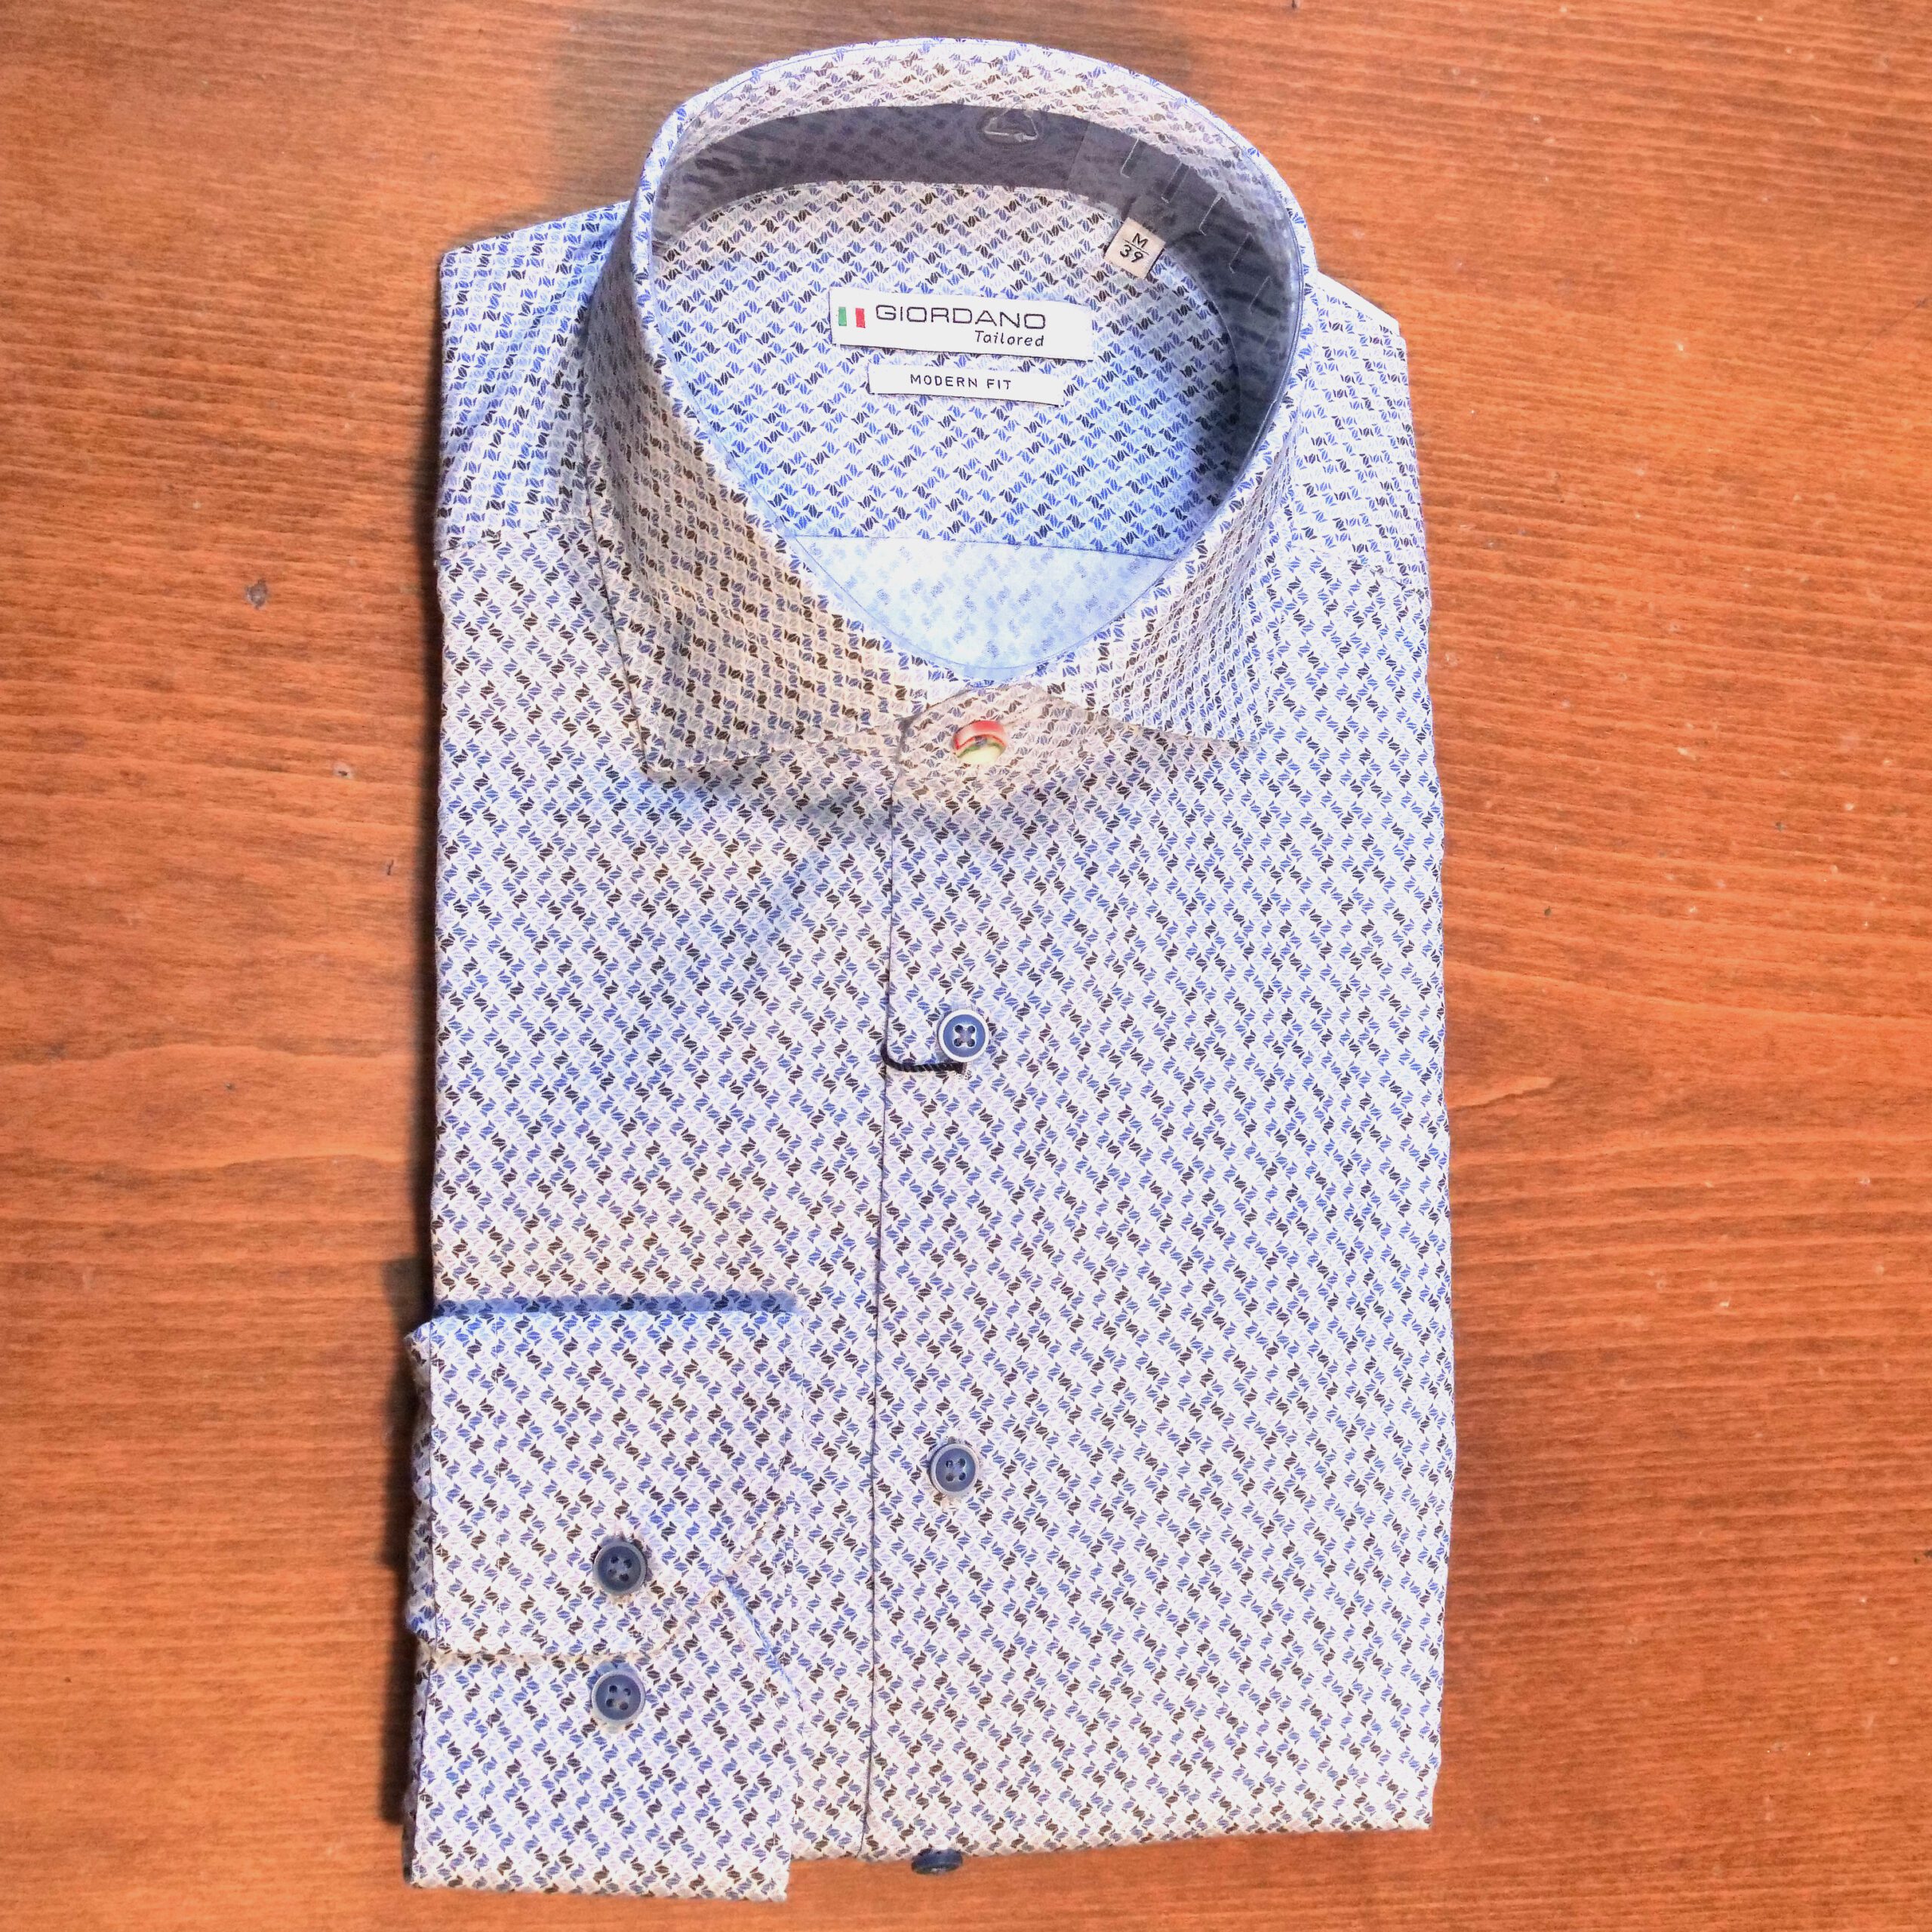 Giordano white shirt with tiny grey black and blue interlocking shapes ...